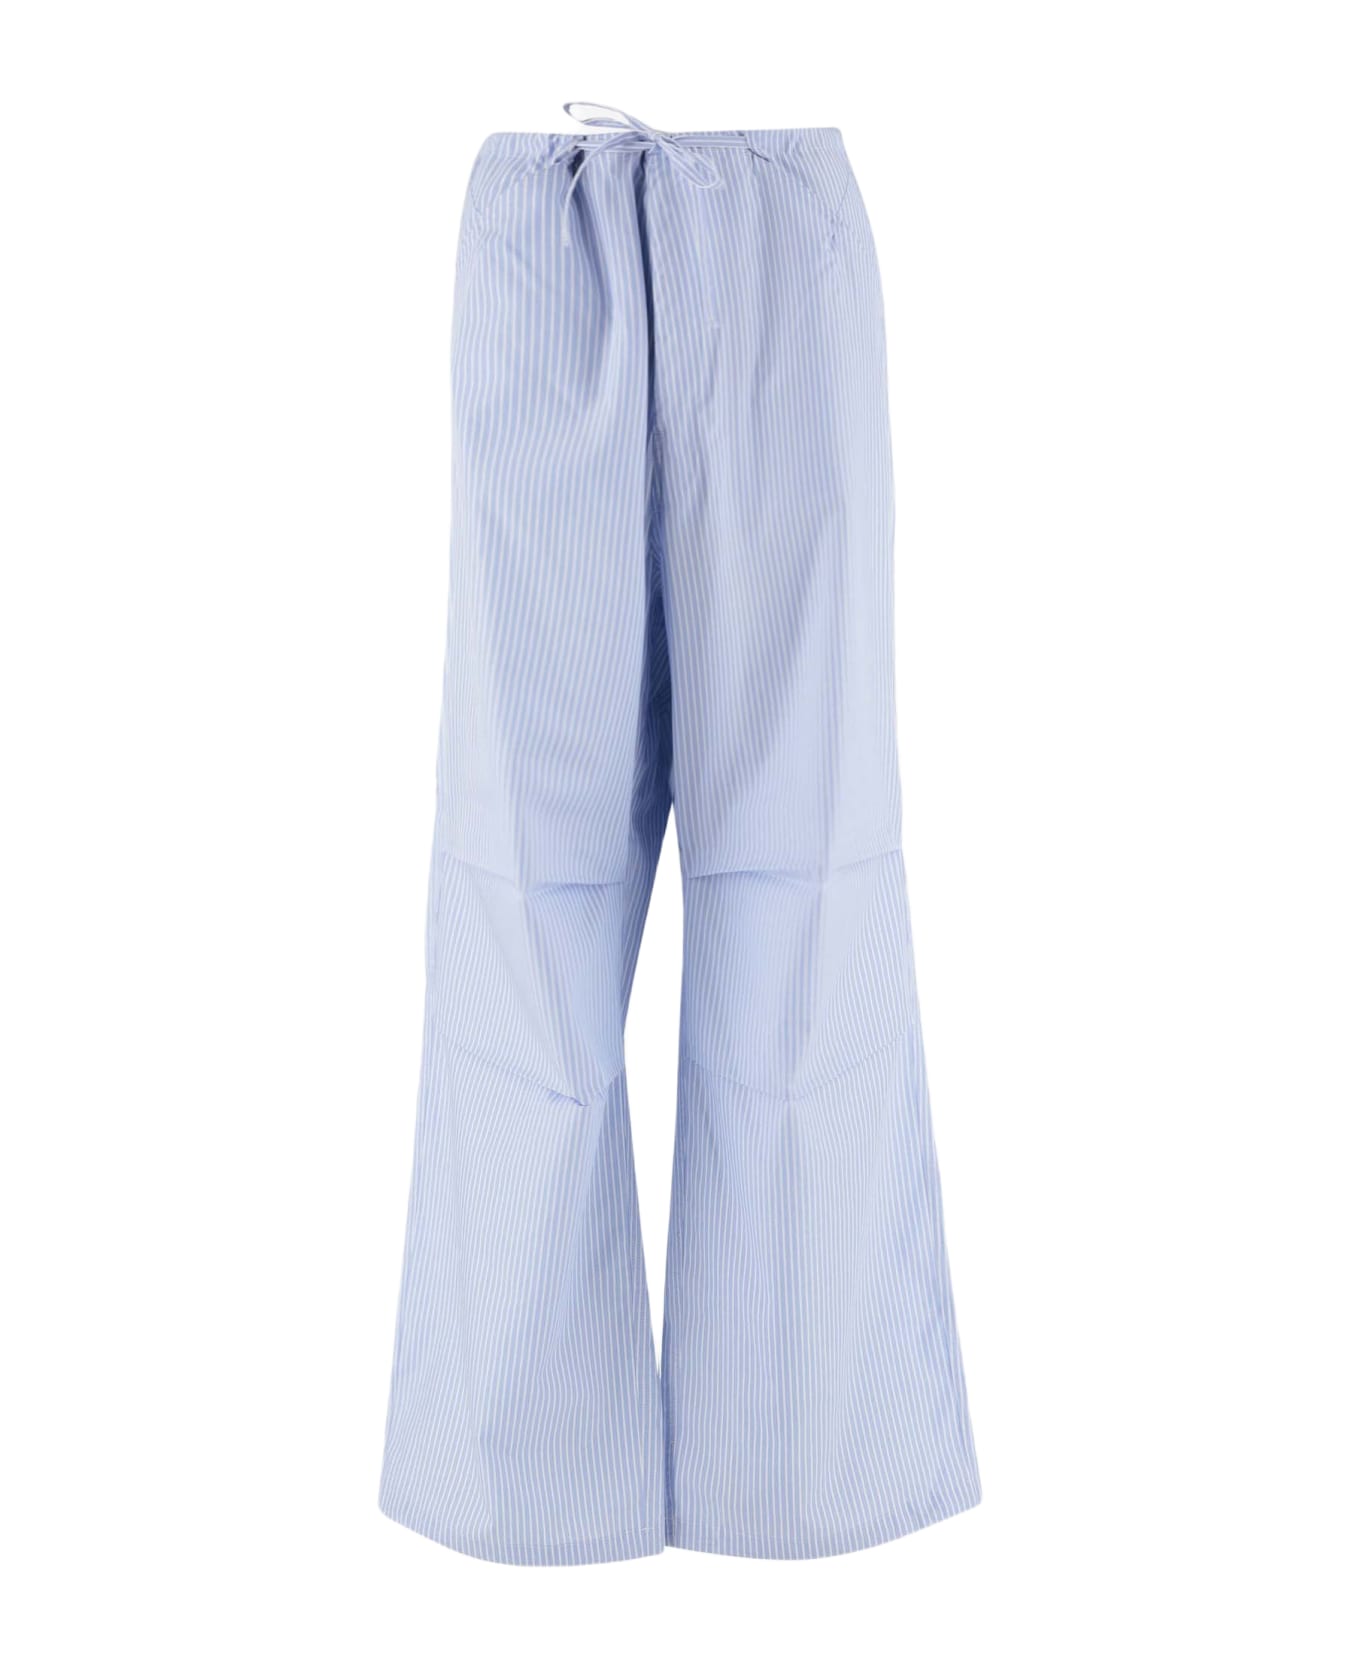 DARKPARK Striped Cotton Pants - LIGHT BLUE/WHITE ボトムス